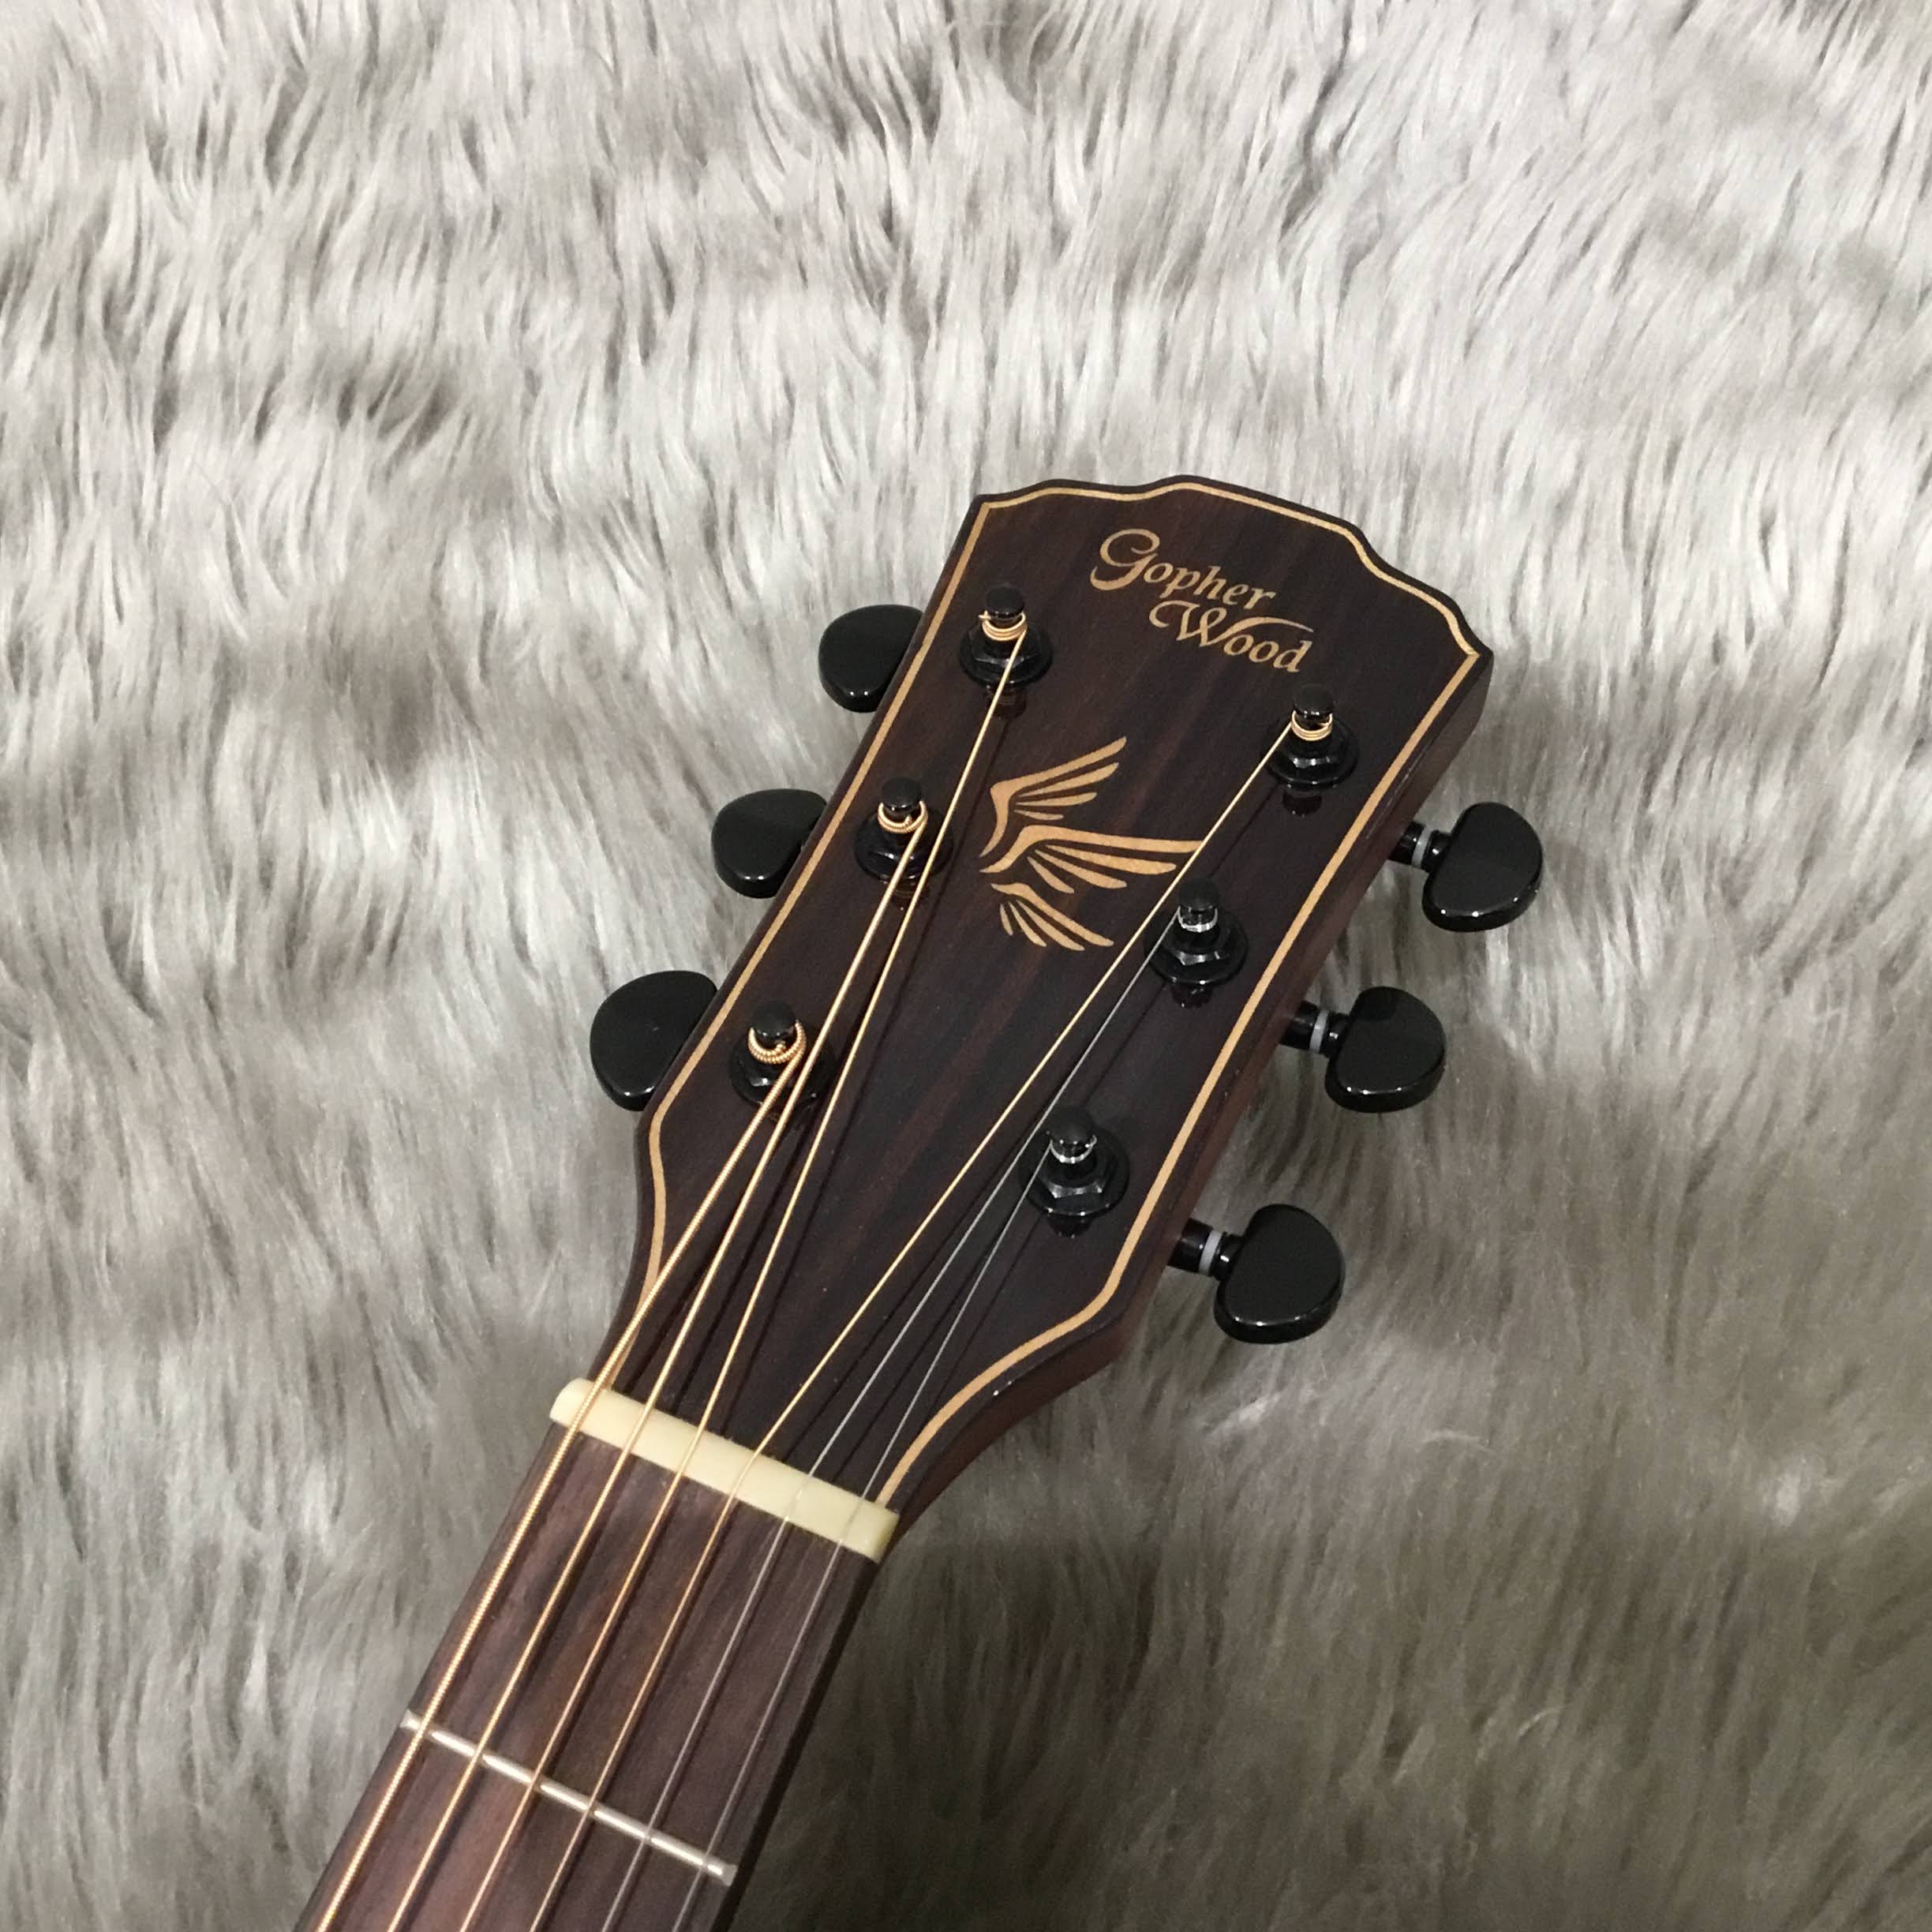 Gopher Wood Guitars i320RCE-JP/Origin ゴフェルウッドギターズ 